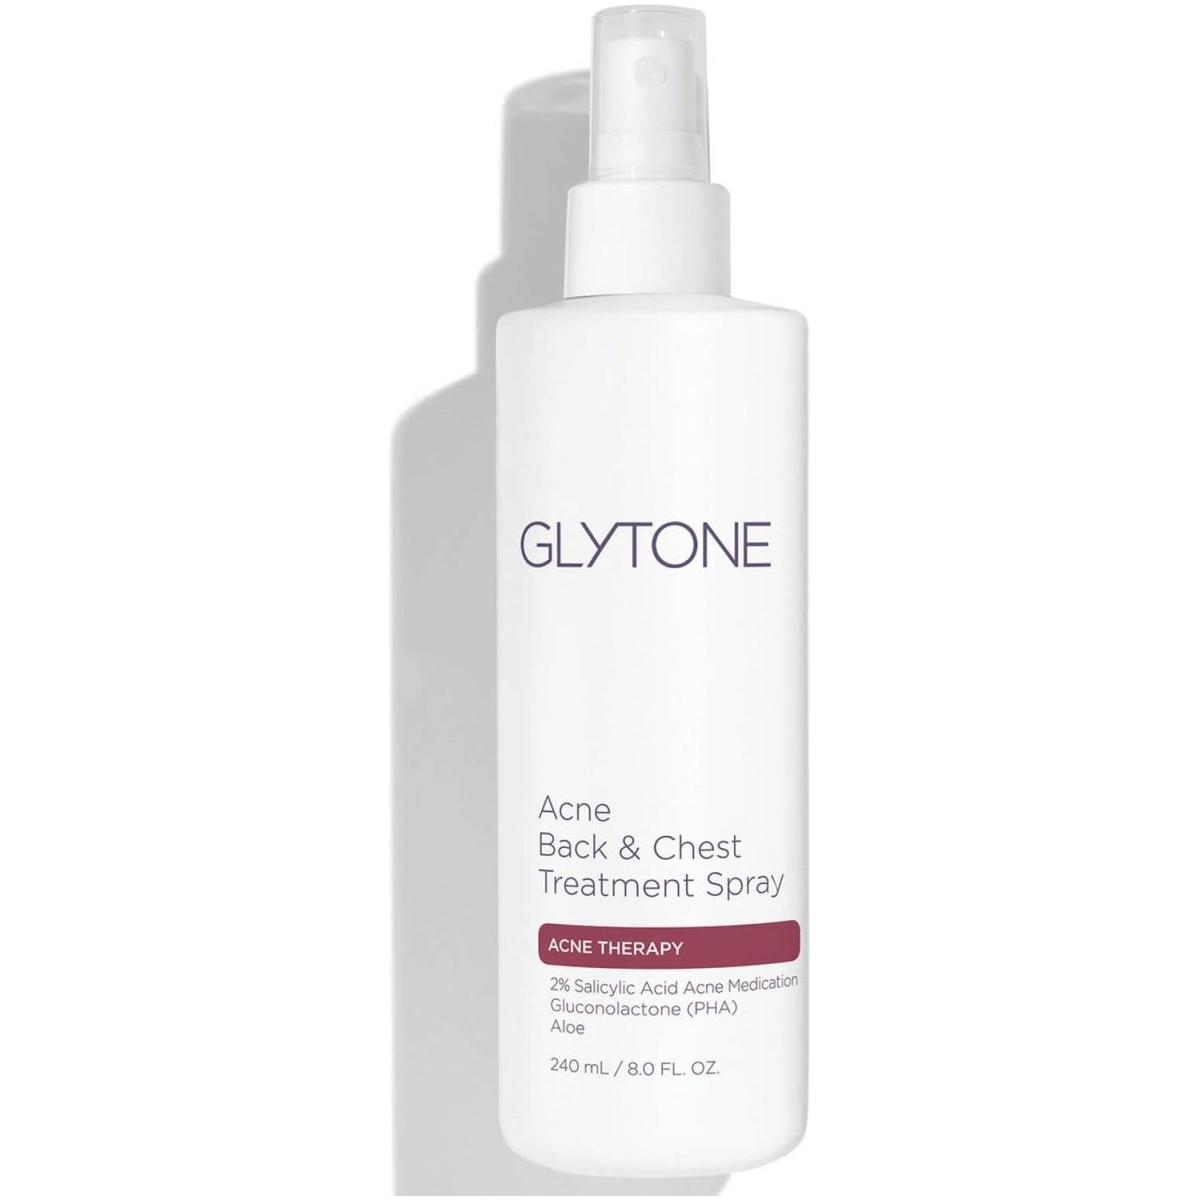 Glytone Acne Back & Chest Treatment Spray - 240ml - DG International Ventures Limited